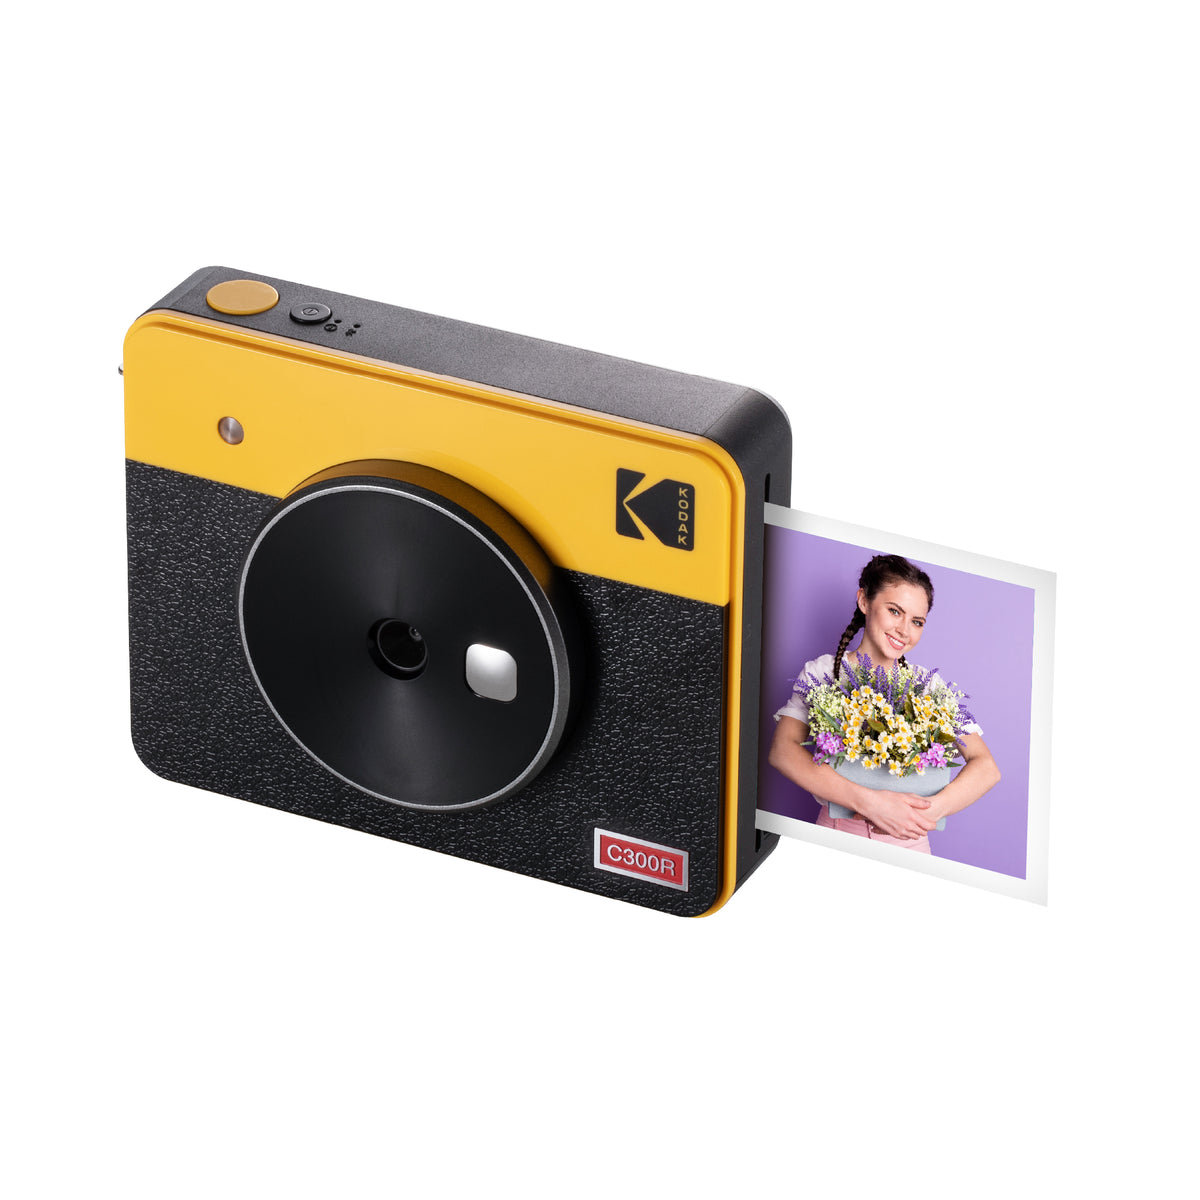 Kodak Mini 2 Instant Photo Printer Review: Allows Users To Produce